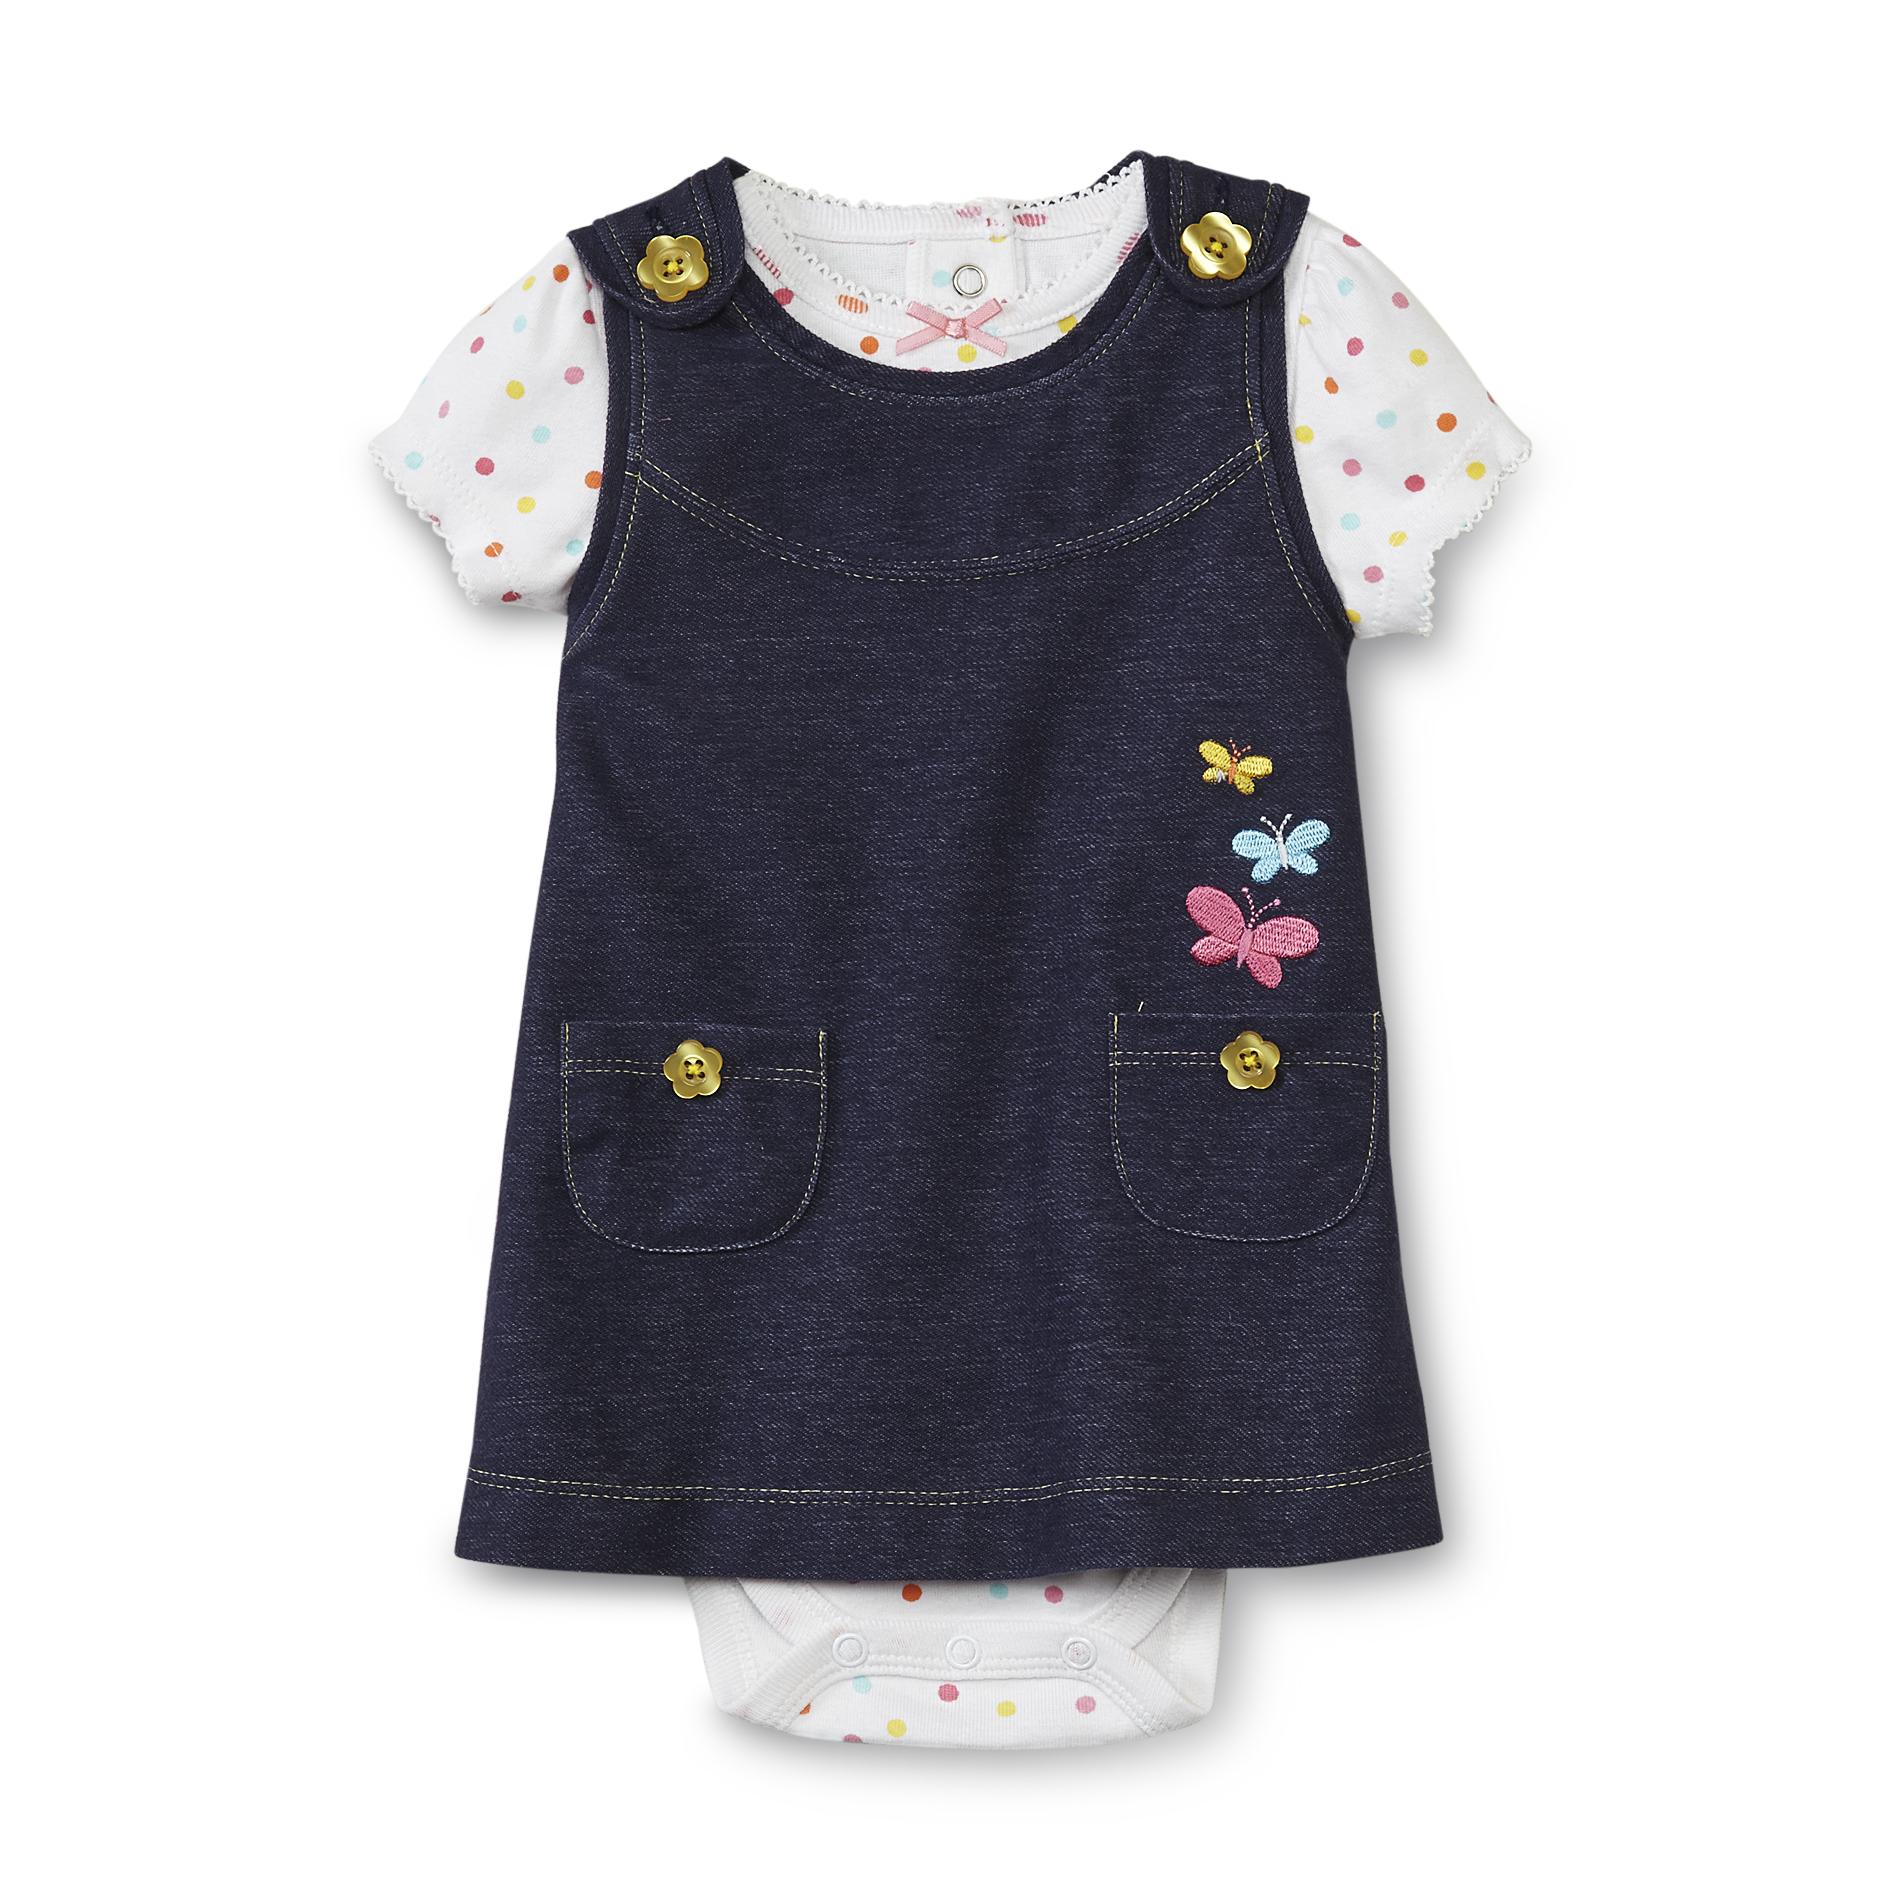 Small Wonders Newborn Girl's Jumper & Bodysuit - Butterflies